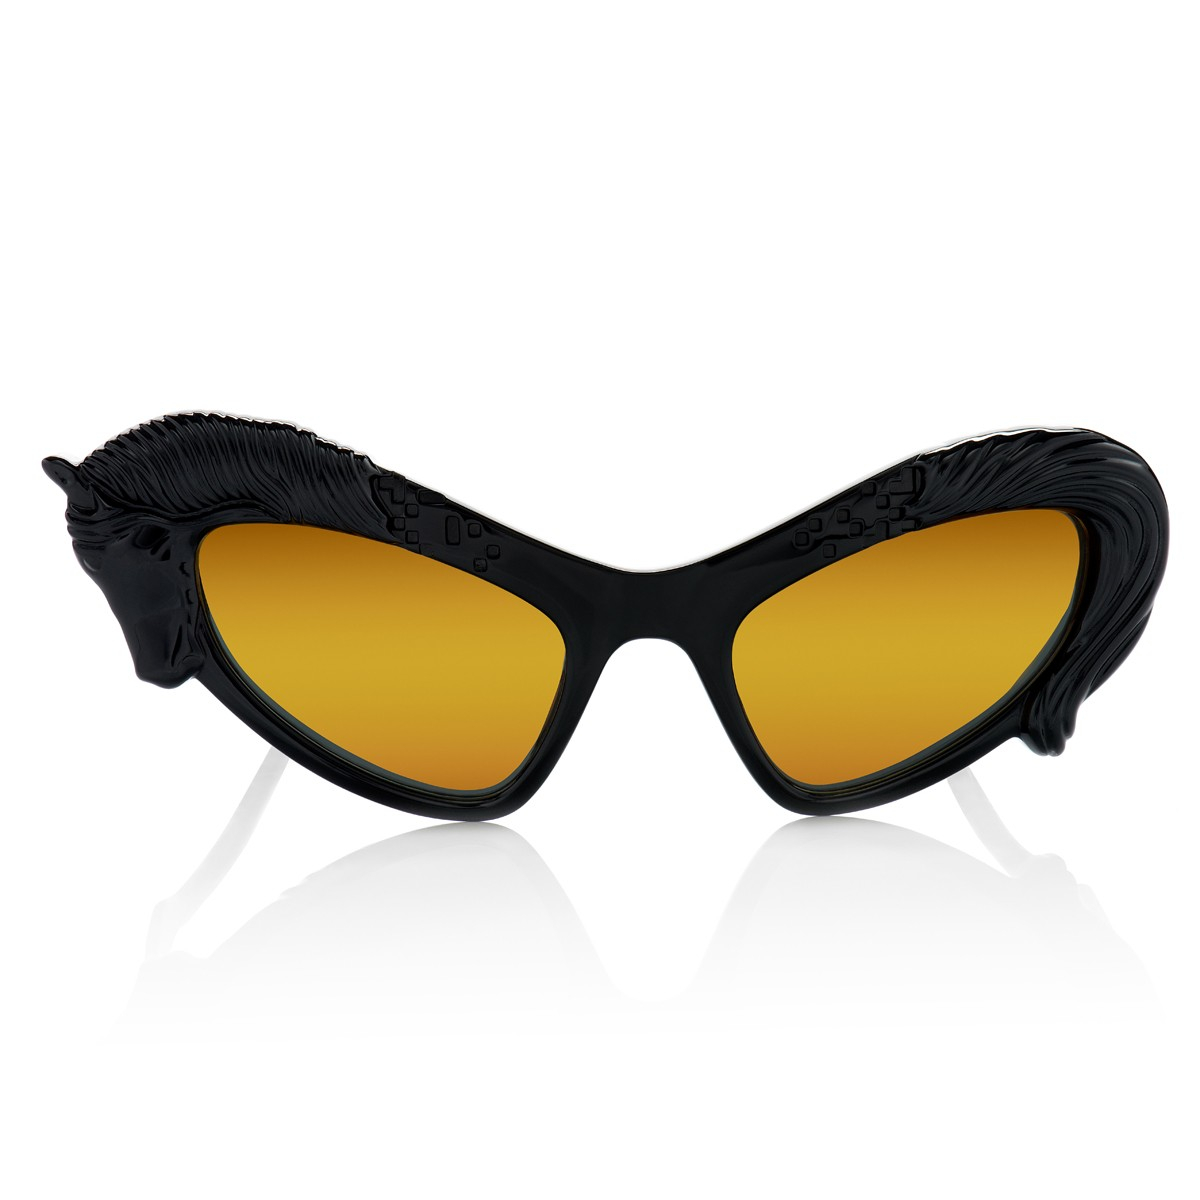 Lyst - Anna Karin Karlsson Black Horse Sunglasses in Black